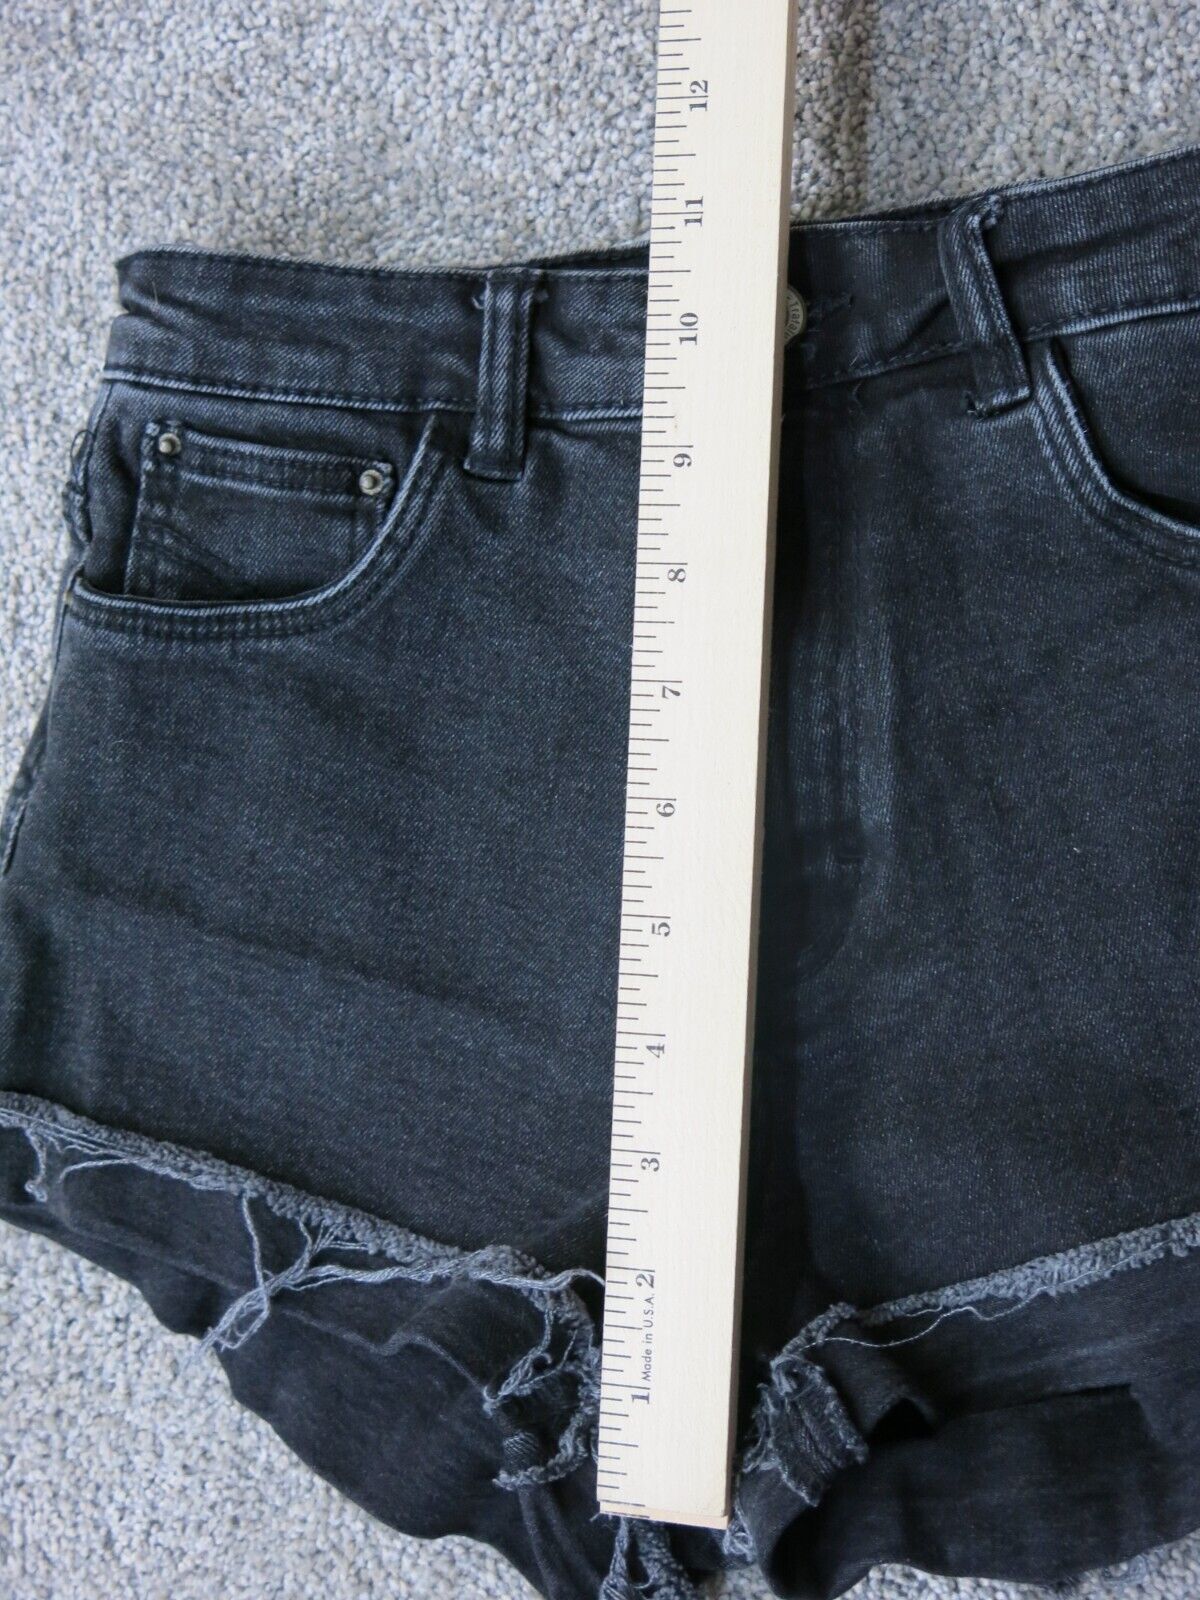 Zara Womens Trafaluc Denimwear Cut Off Jeans Shorts Mid Rise Black Size US 4